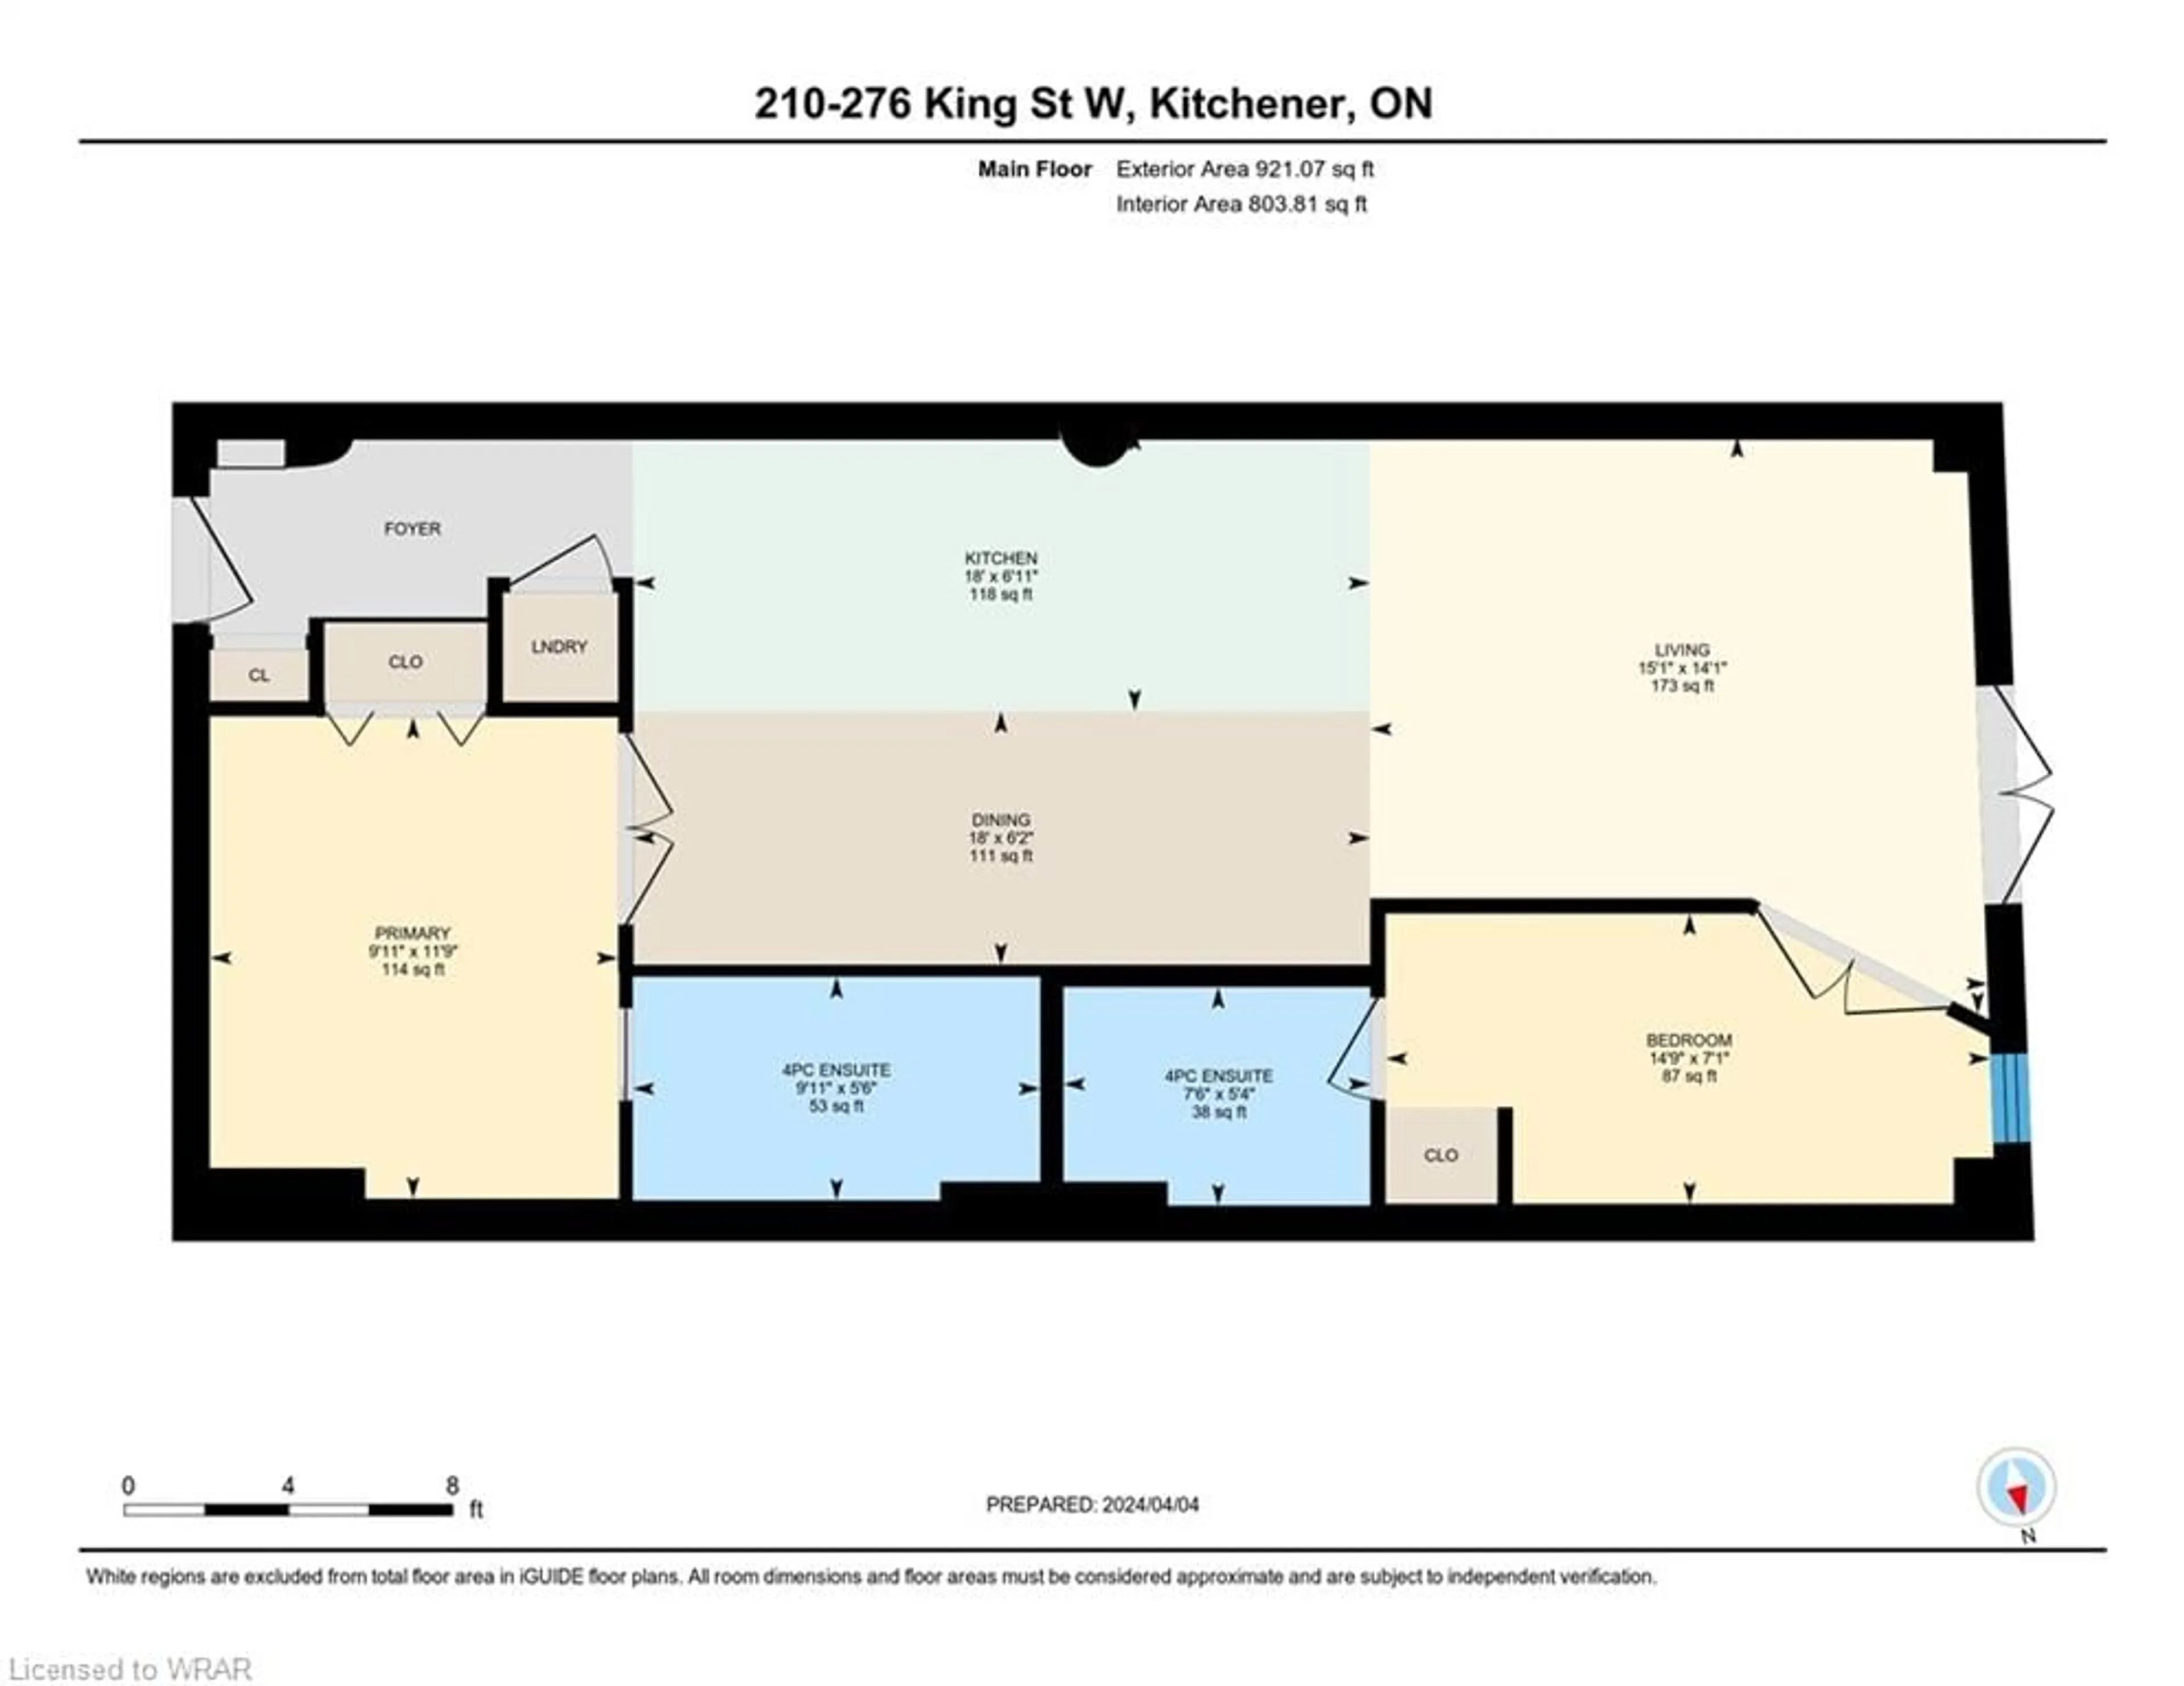 Floor plan for 276 King St #210, Kitchener Ontario N2G 1B6